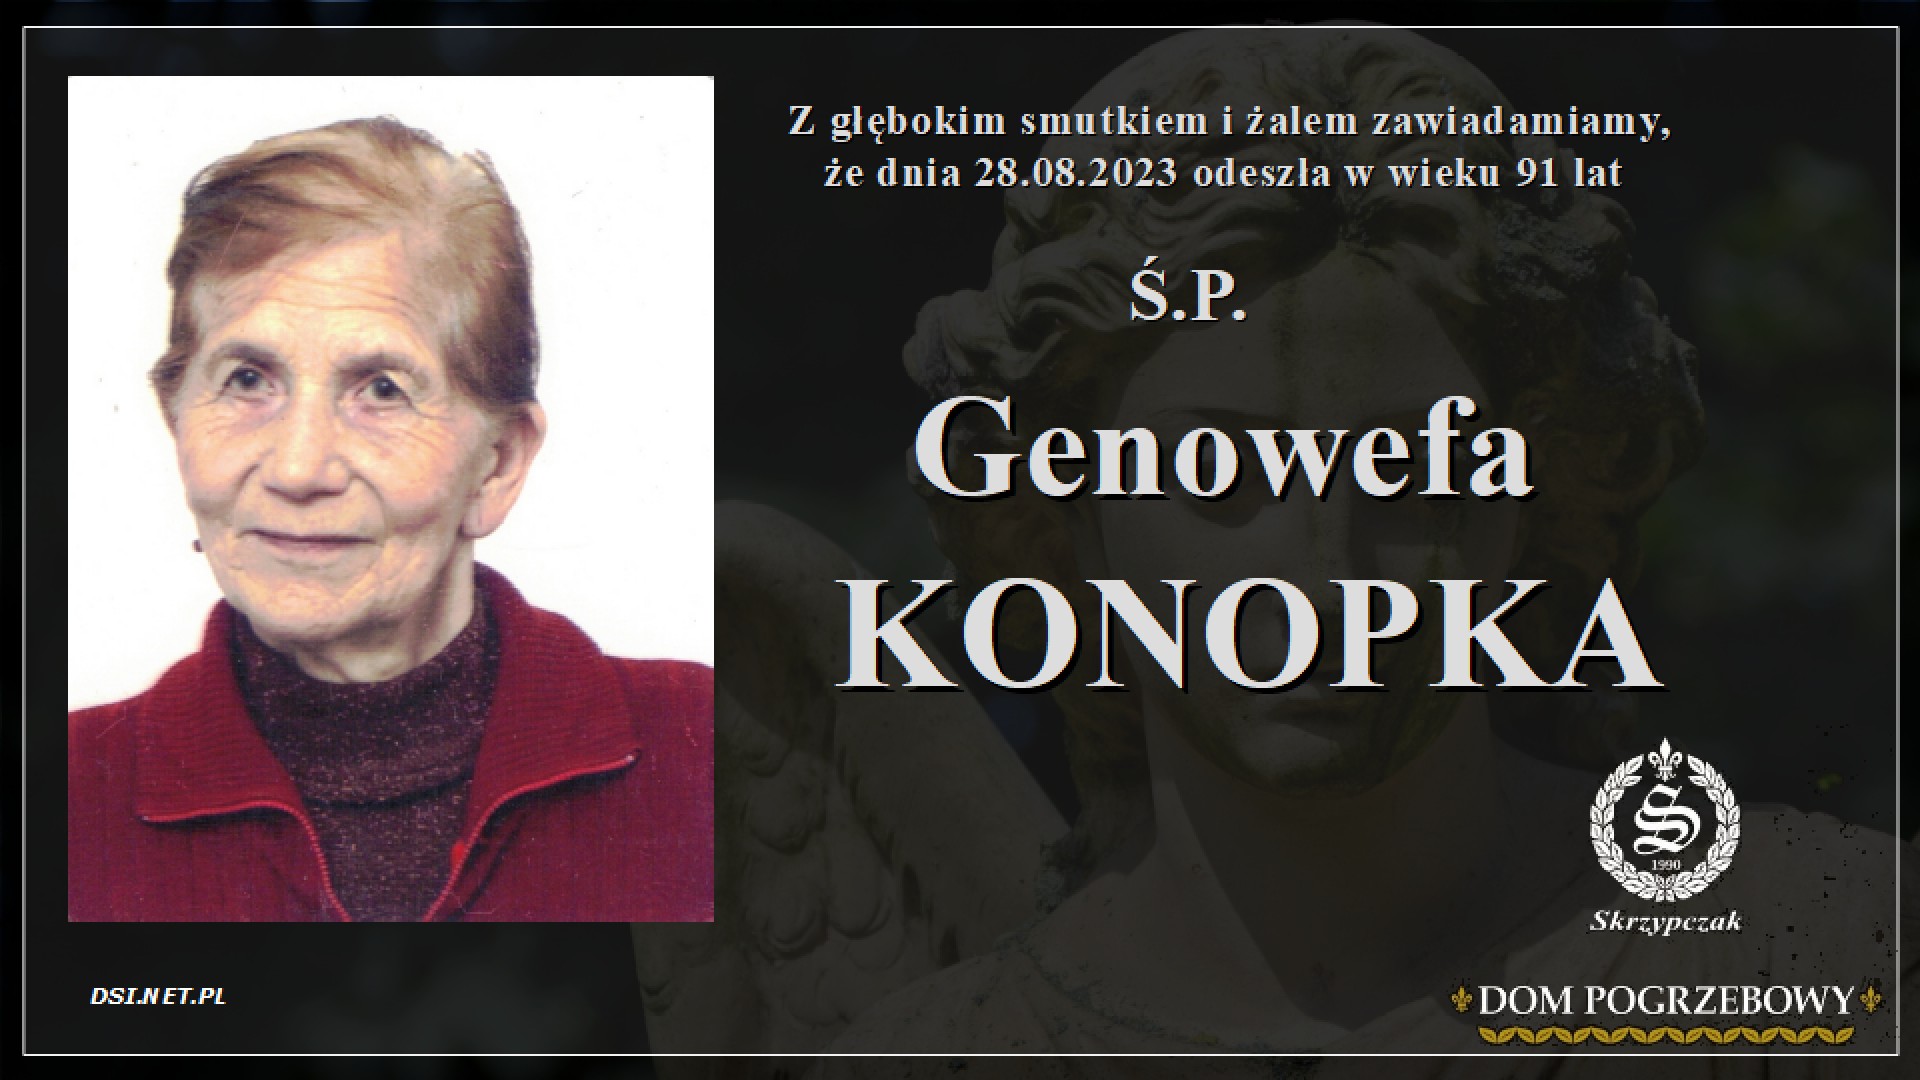 Ś.P. Genowefa Konopka